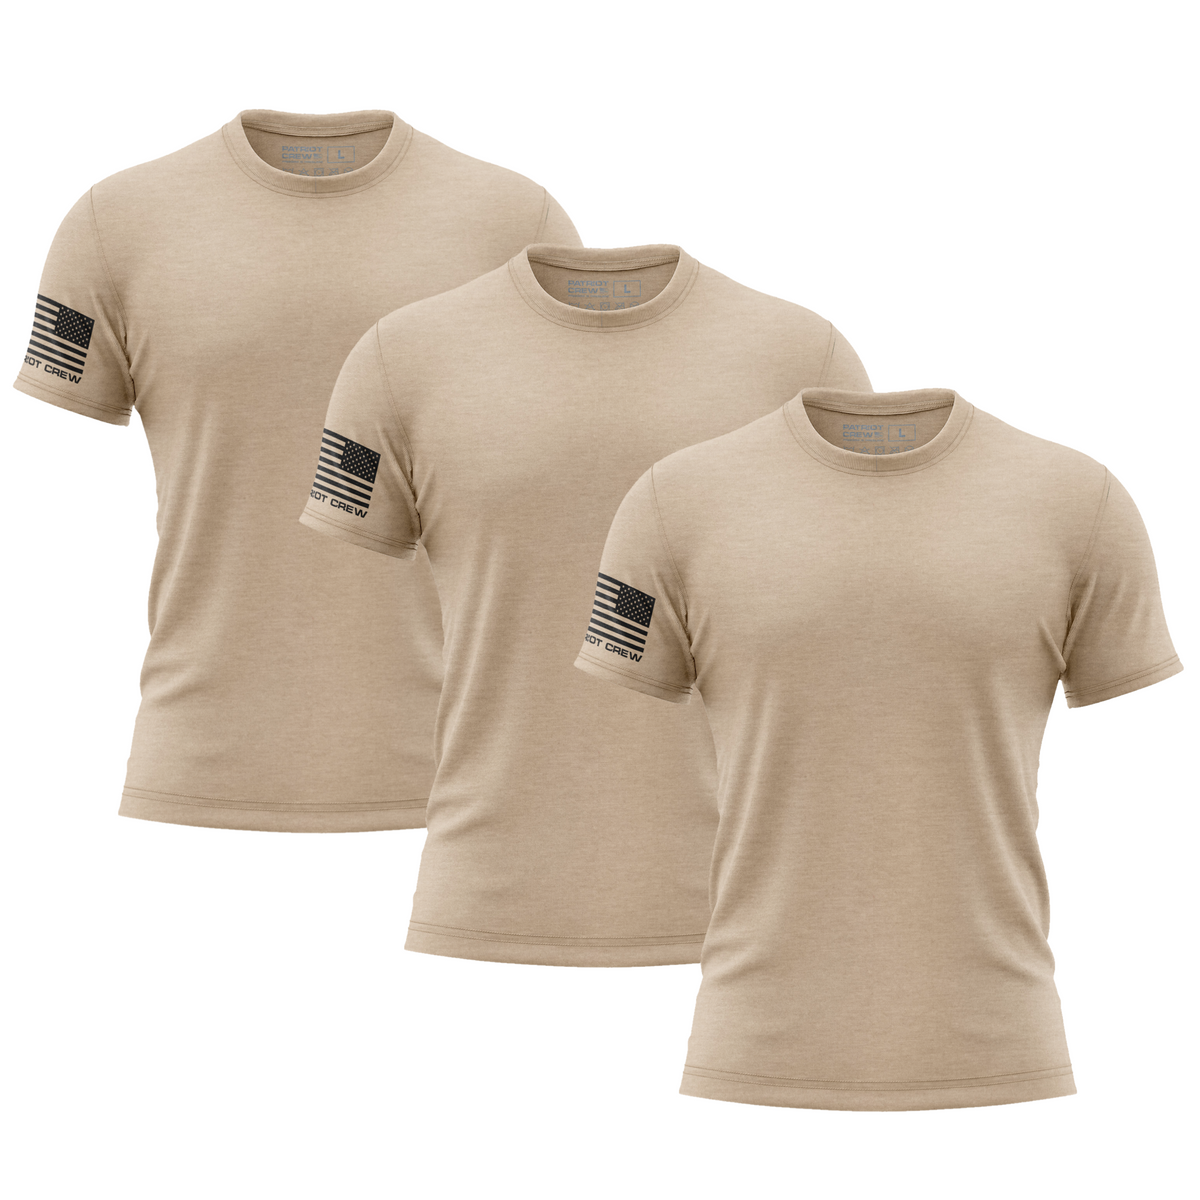 Sand T-Shirt (3 Pack)